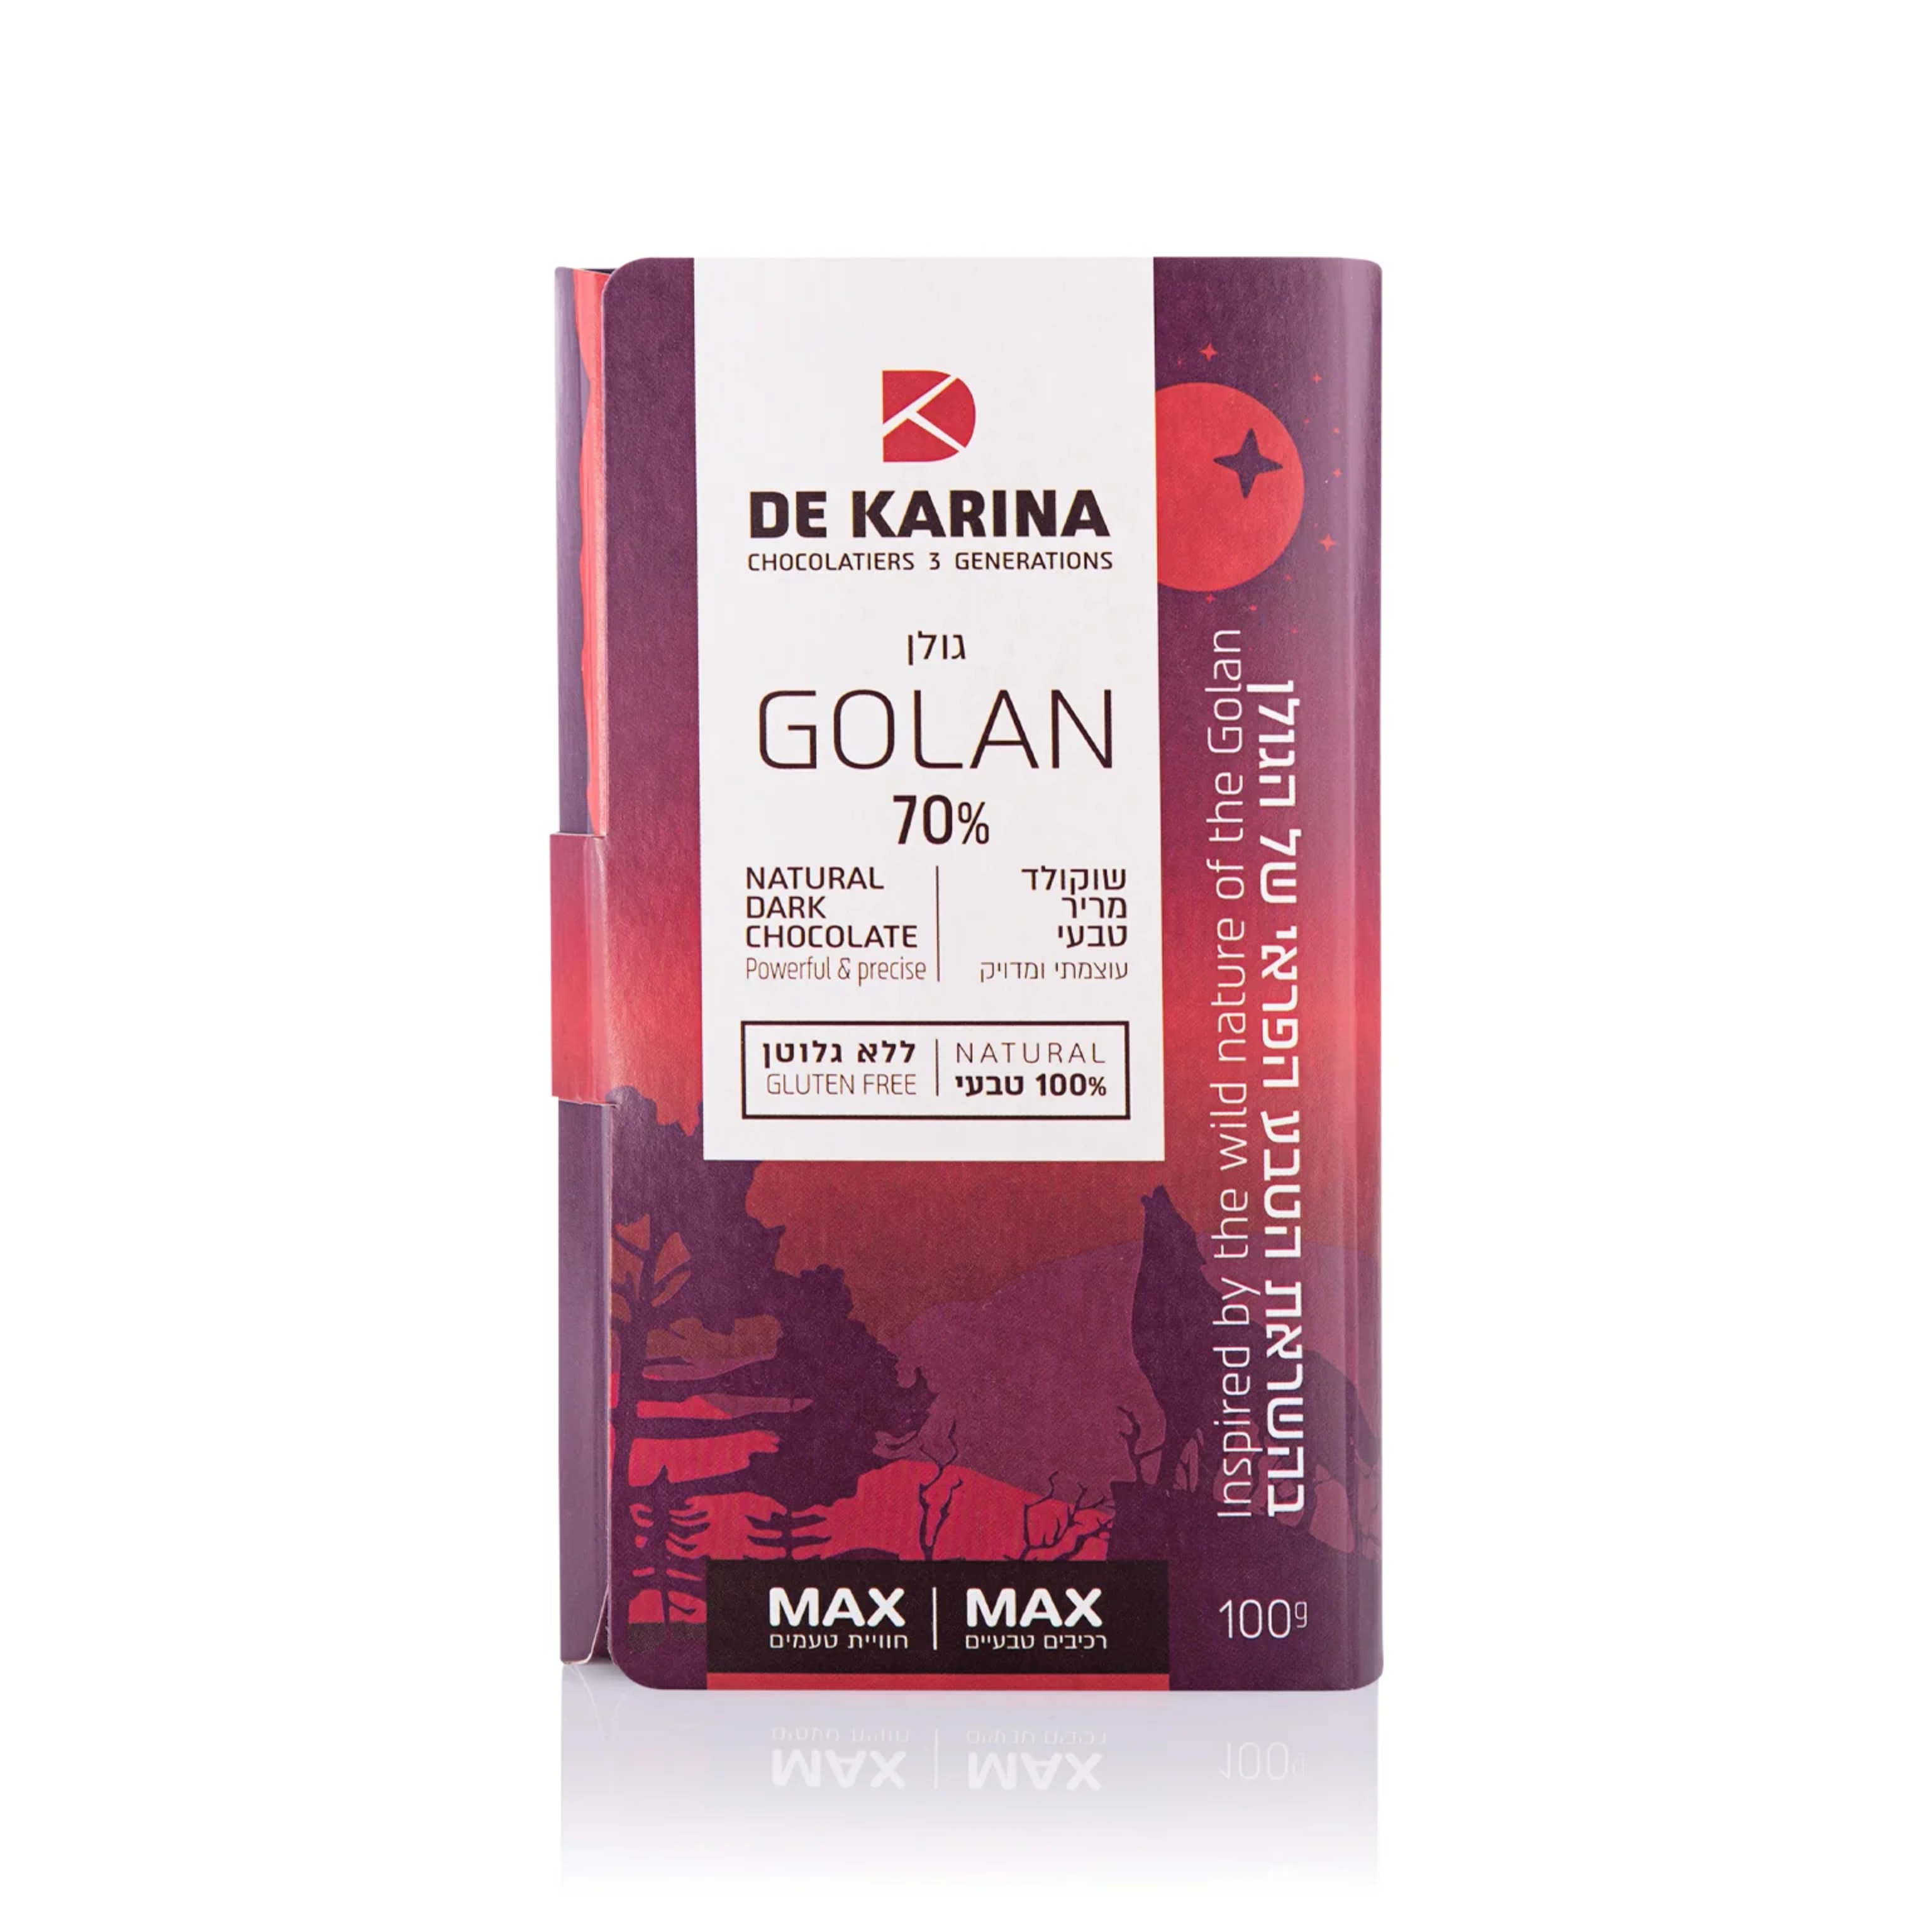 De Karina - 70% natural dark chocolate bar - salted caramel - Golan |  fur |  in the